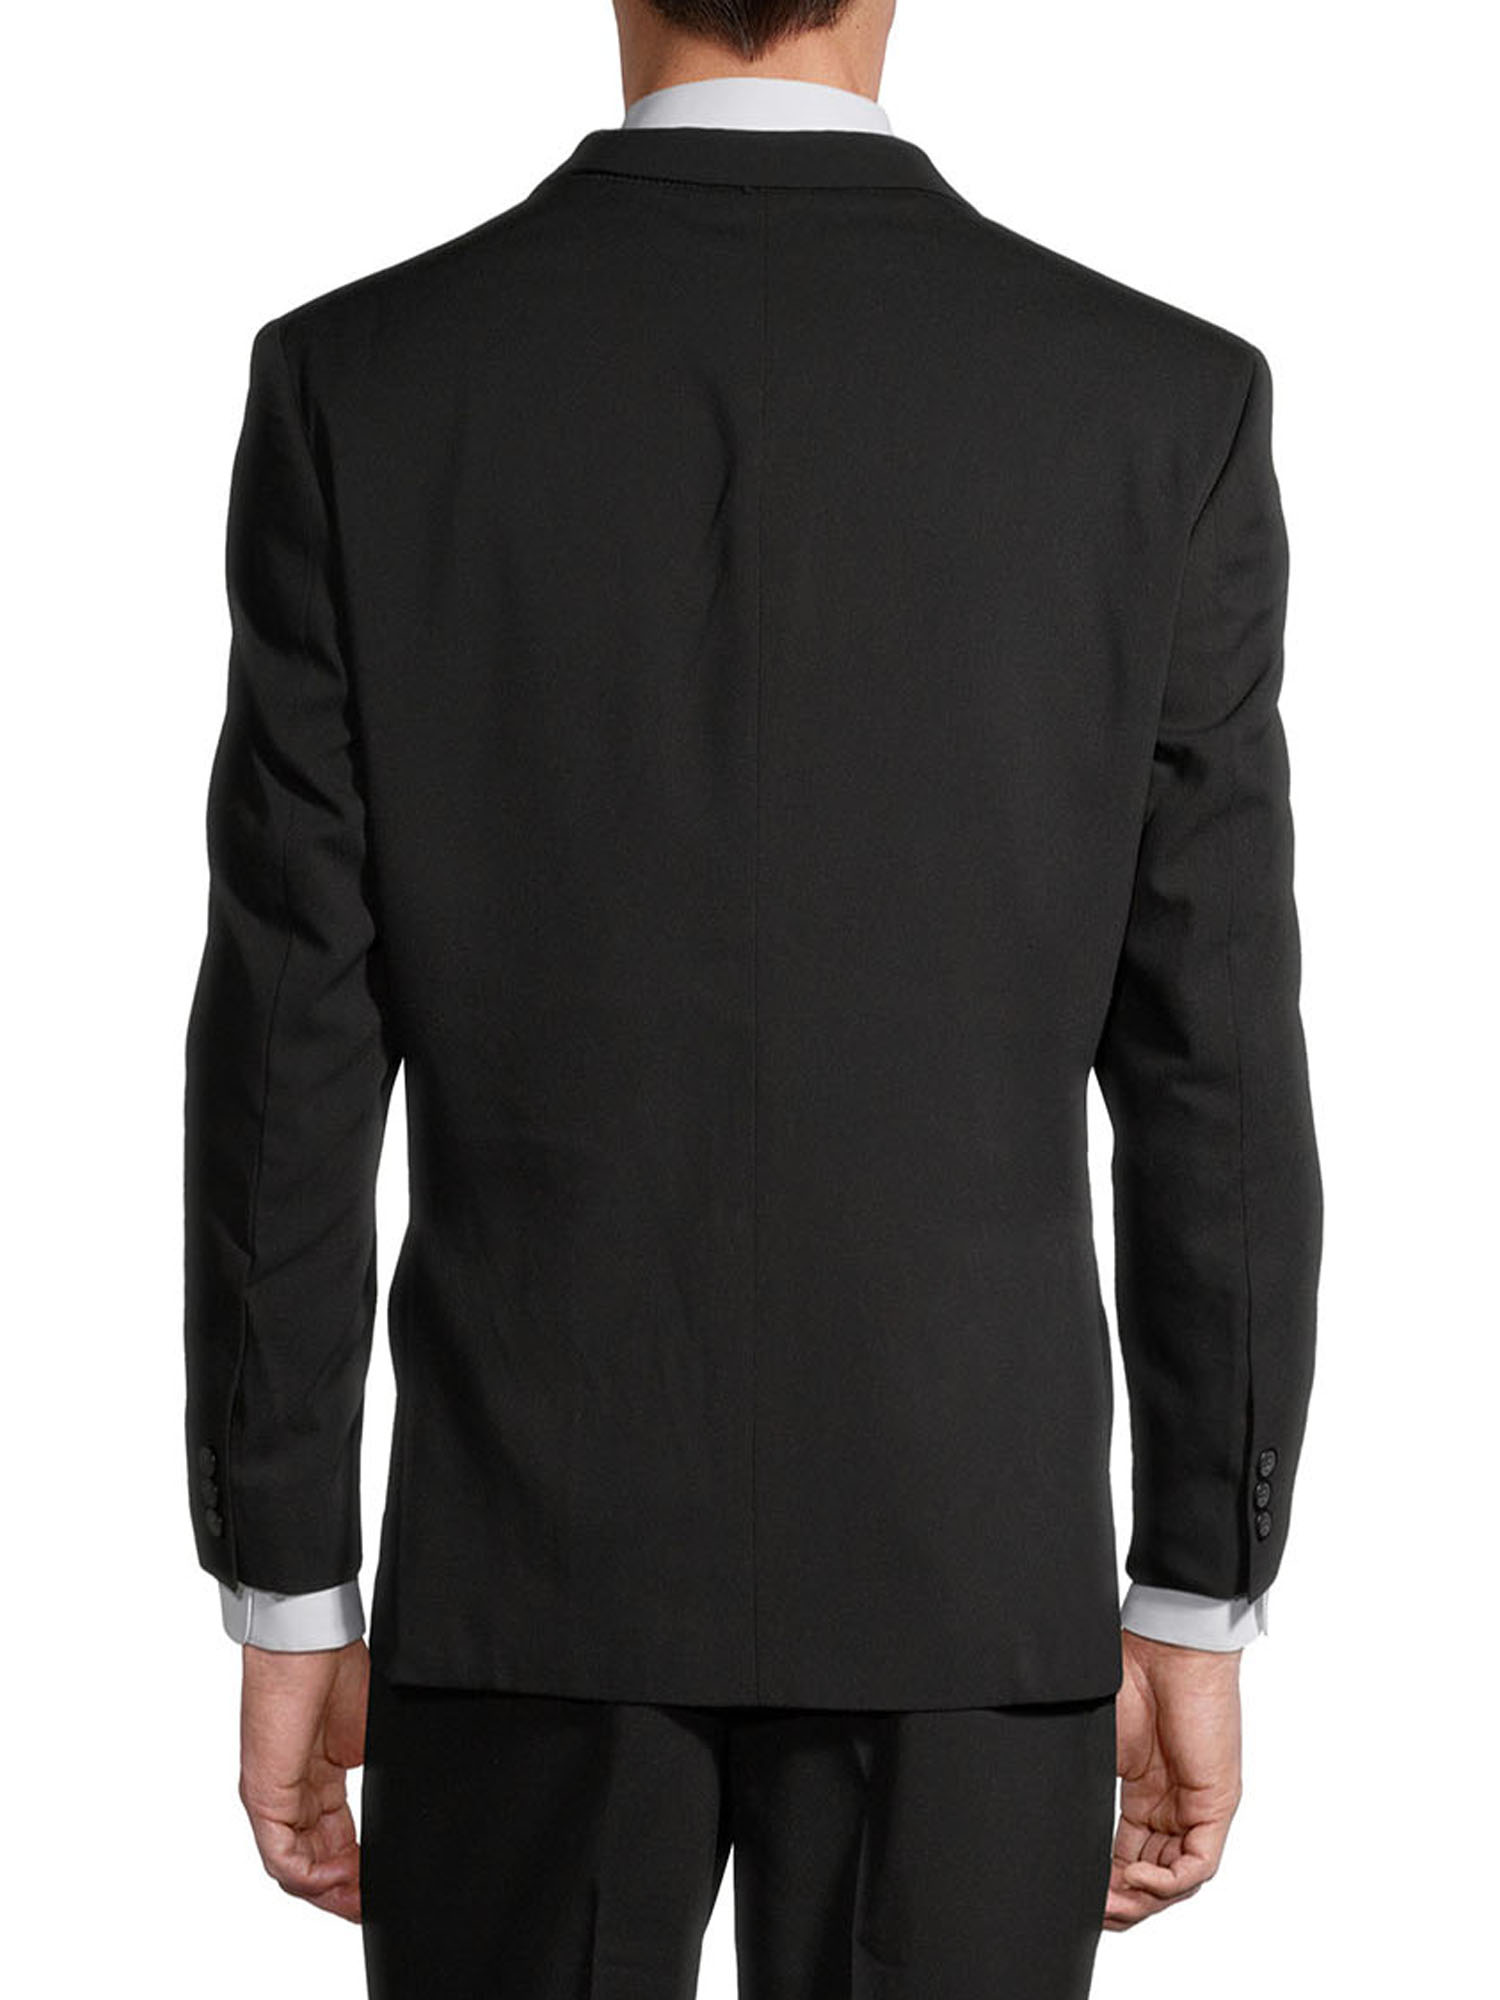 George Men's Performance Comfort Flex Suit Jacket - image 3 of 6